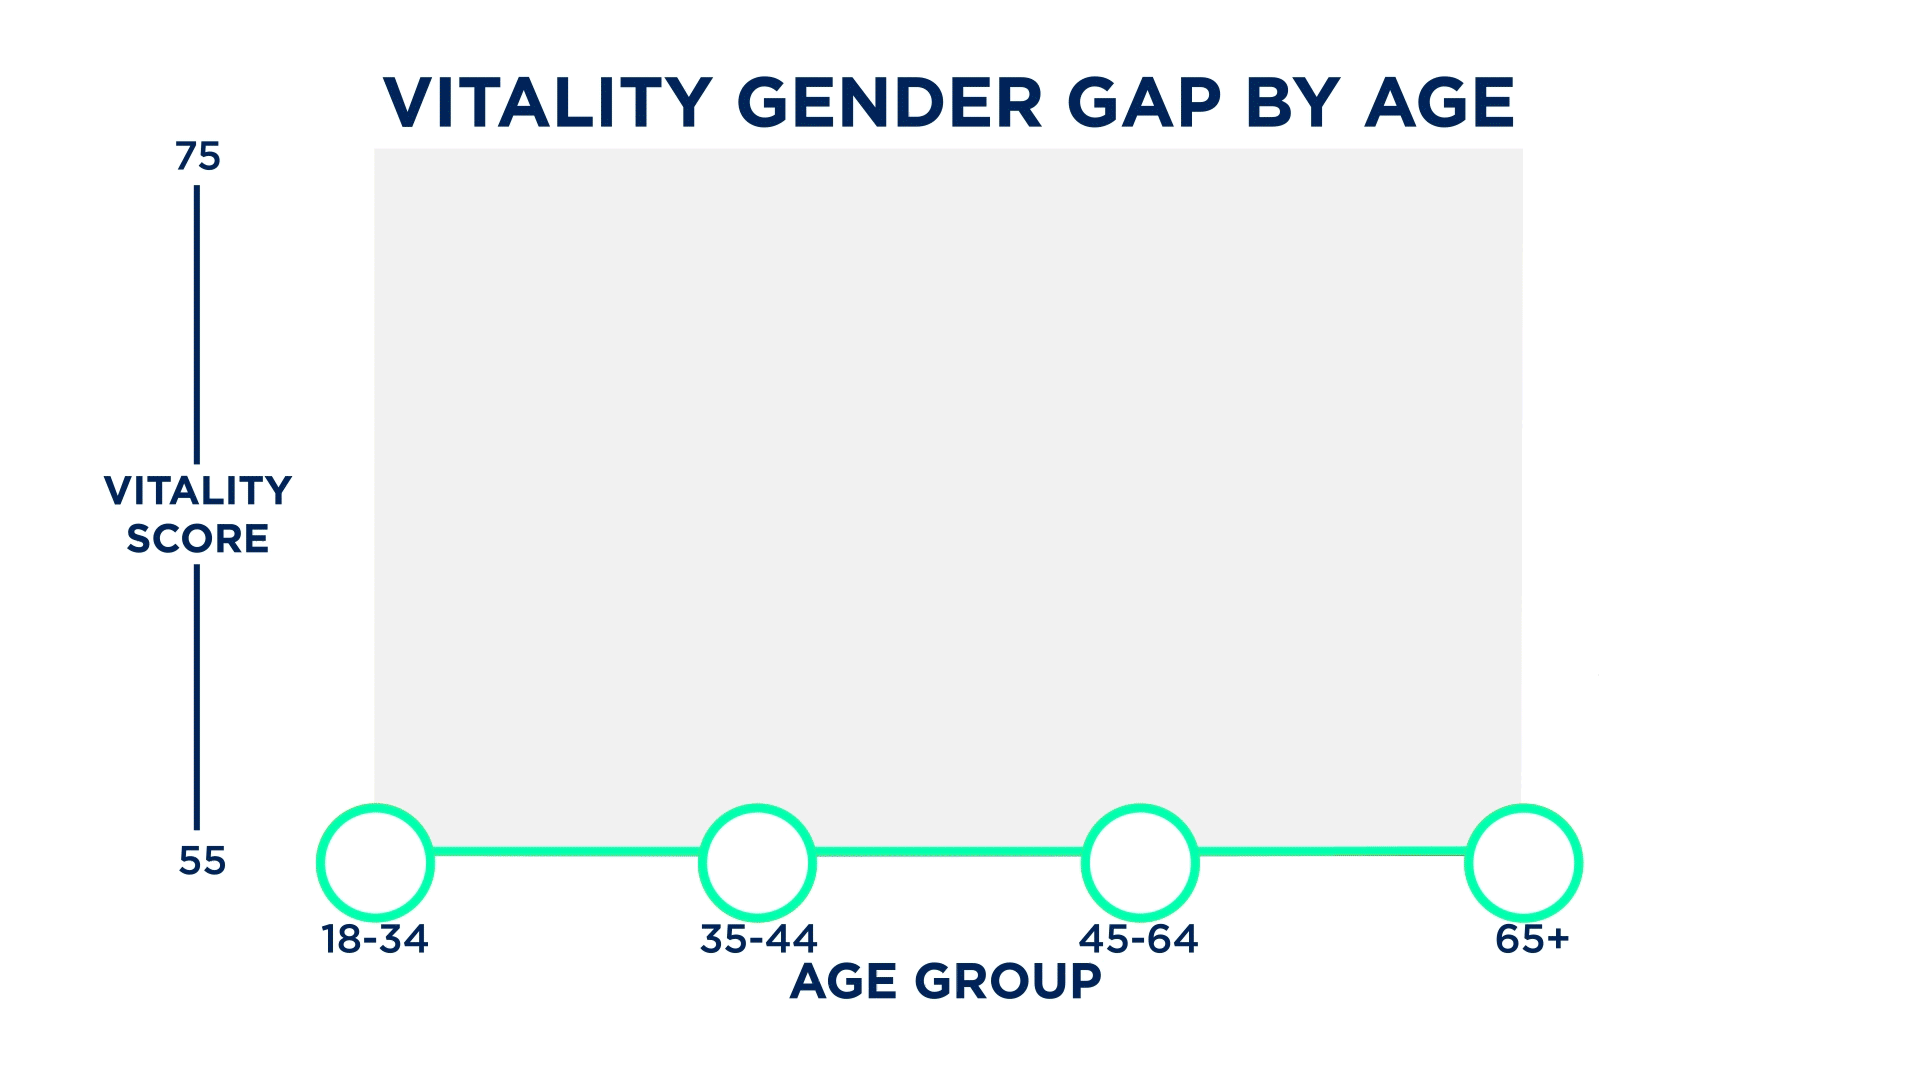 Vitality gender gap by age